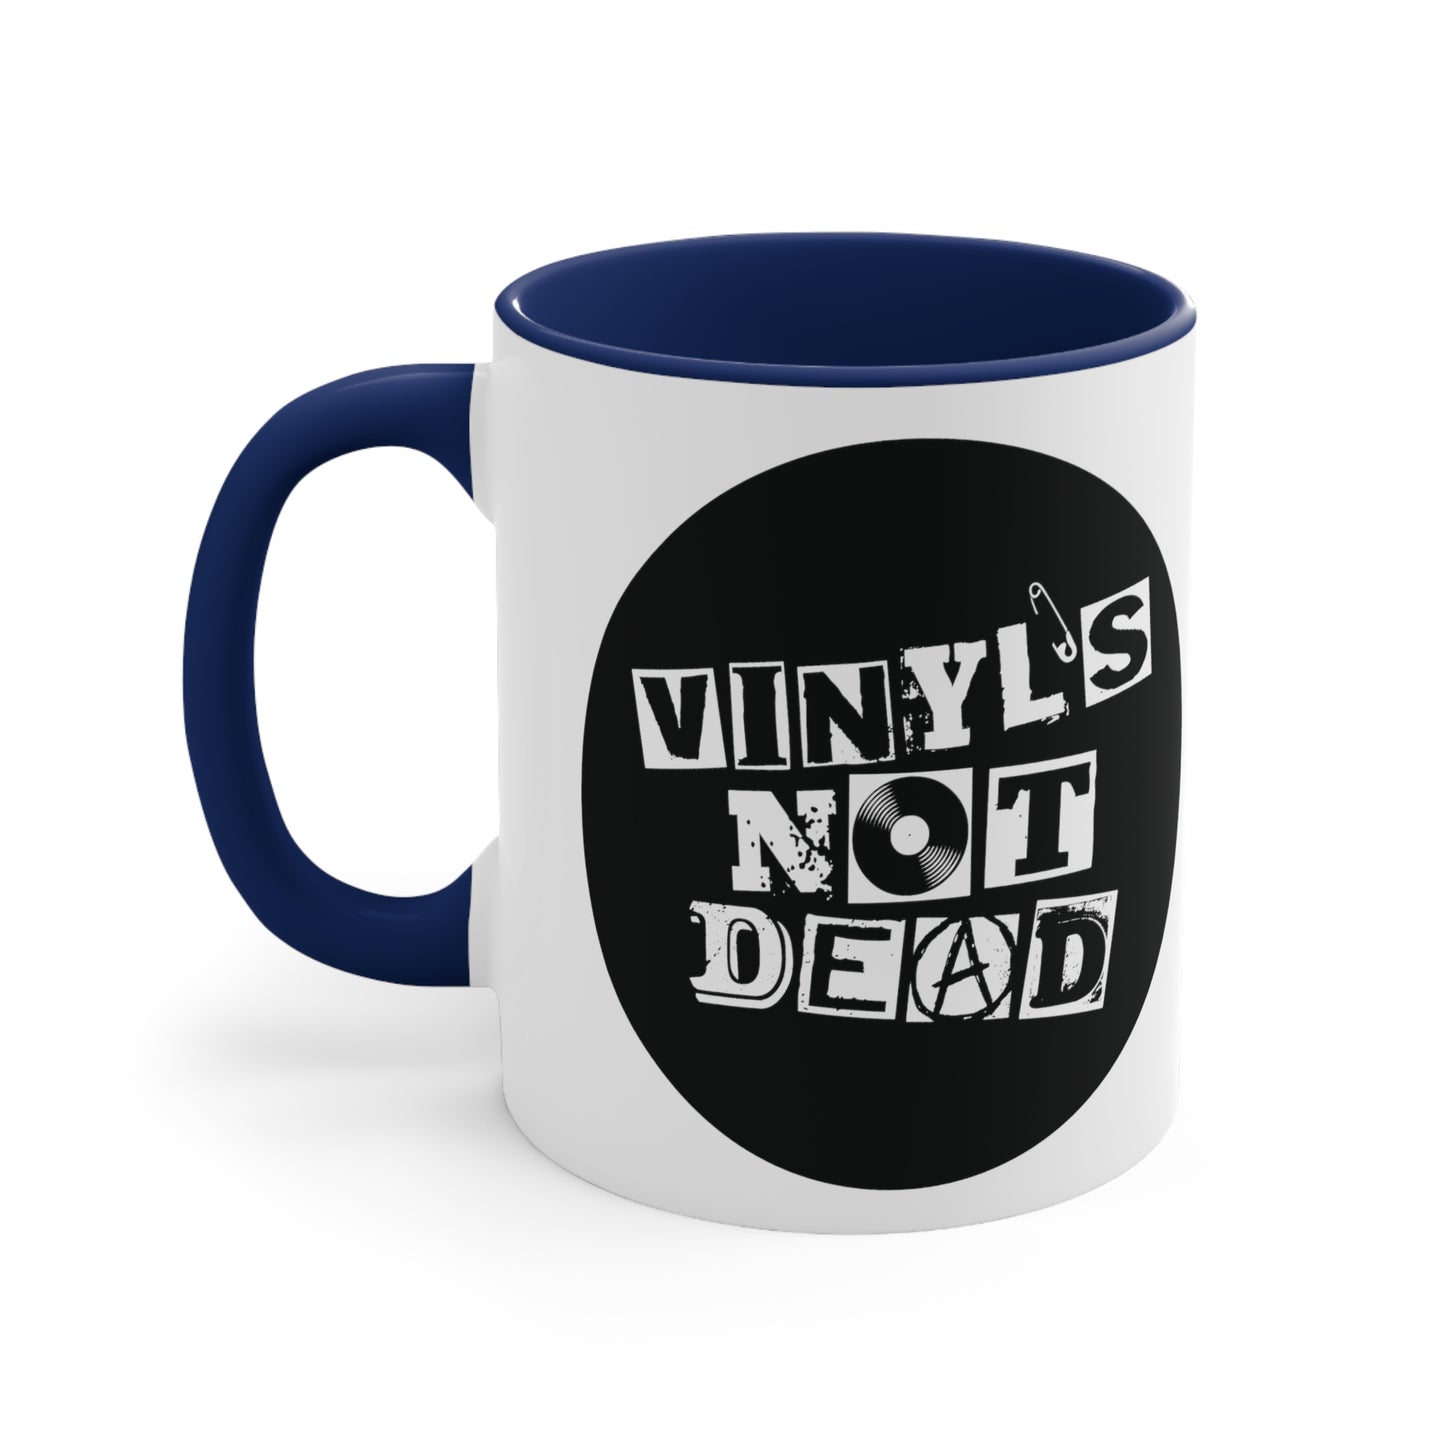 Vinyl Record Themed 11oz Accent Coffee Mug - Vinyl is Not Dead Print